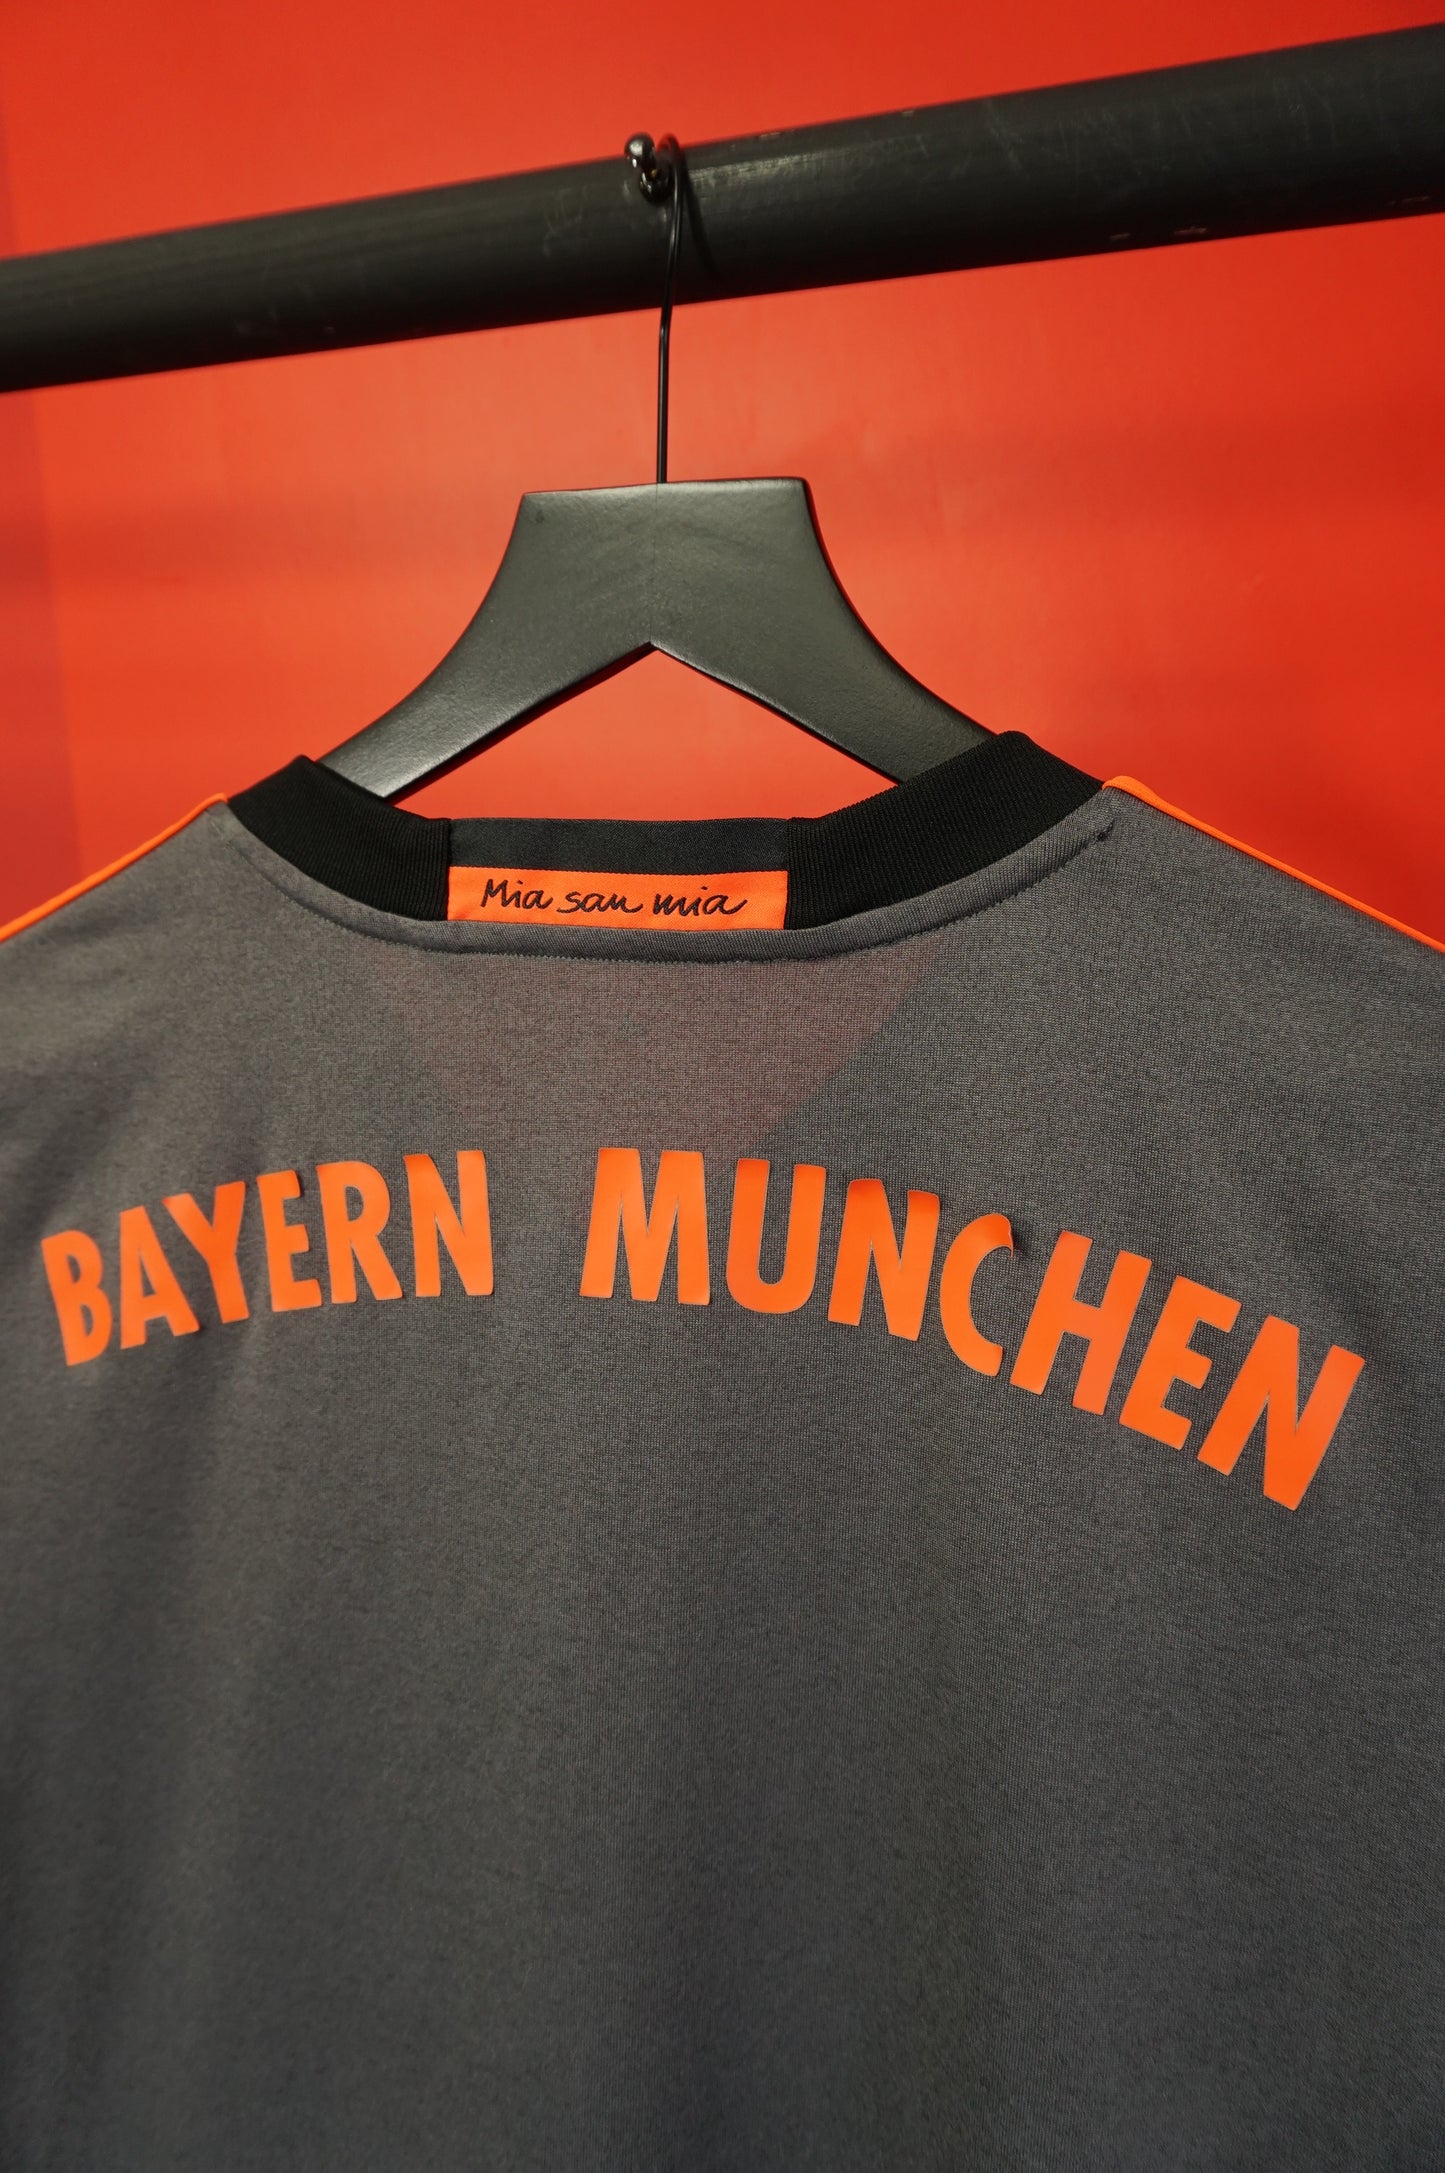 (M) Bayern Munchen Jersey